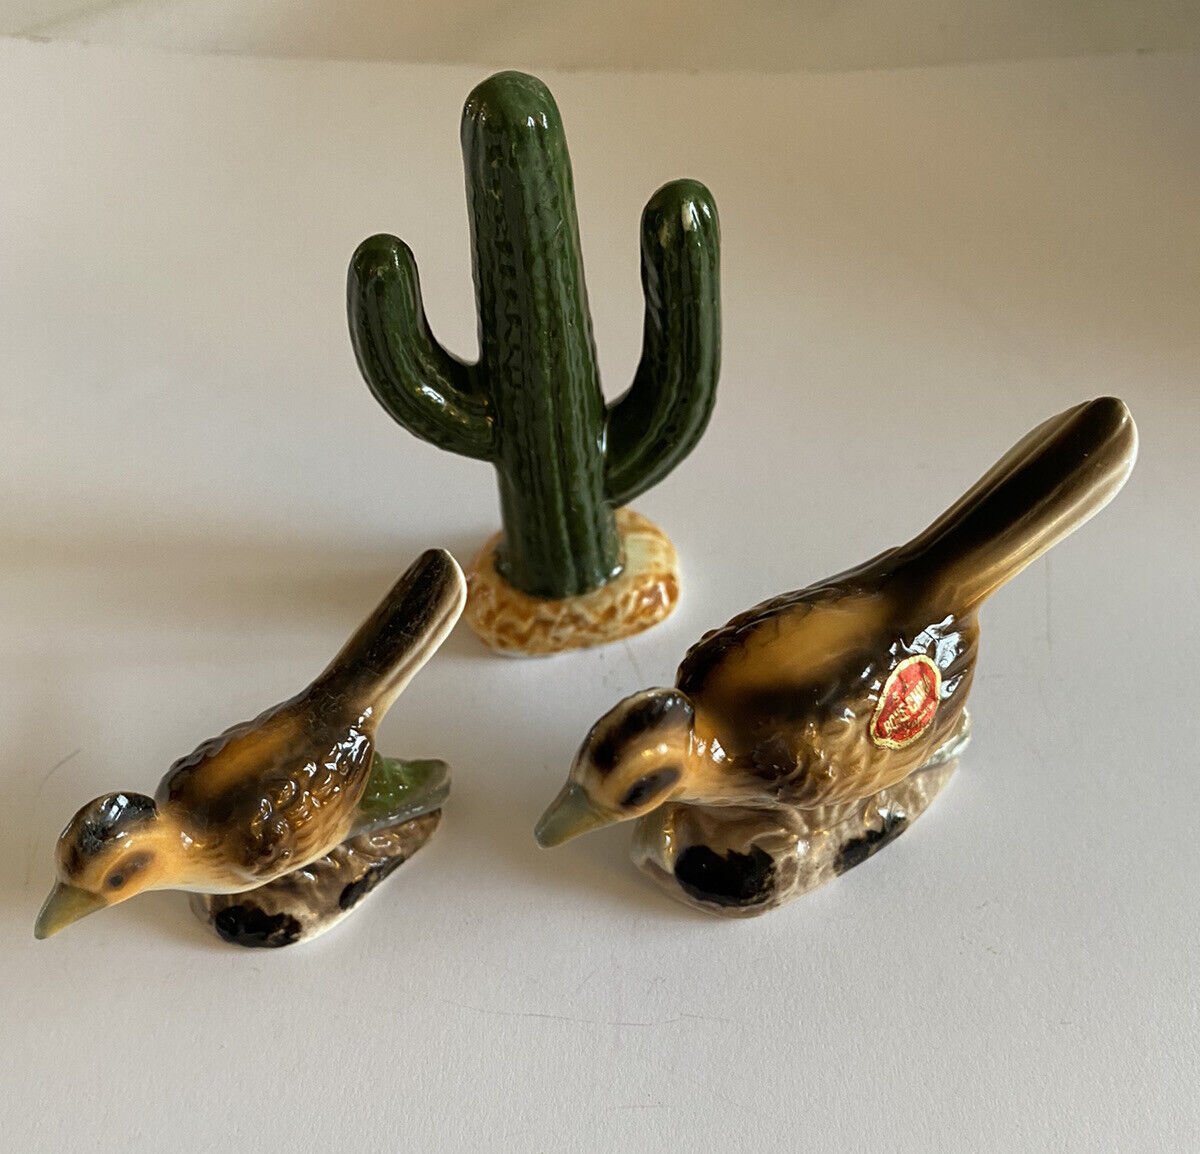 Bone China 2 Road Runners & Cactus Vintage Miniature Figurines S.S. Made Japan